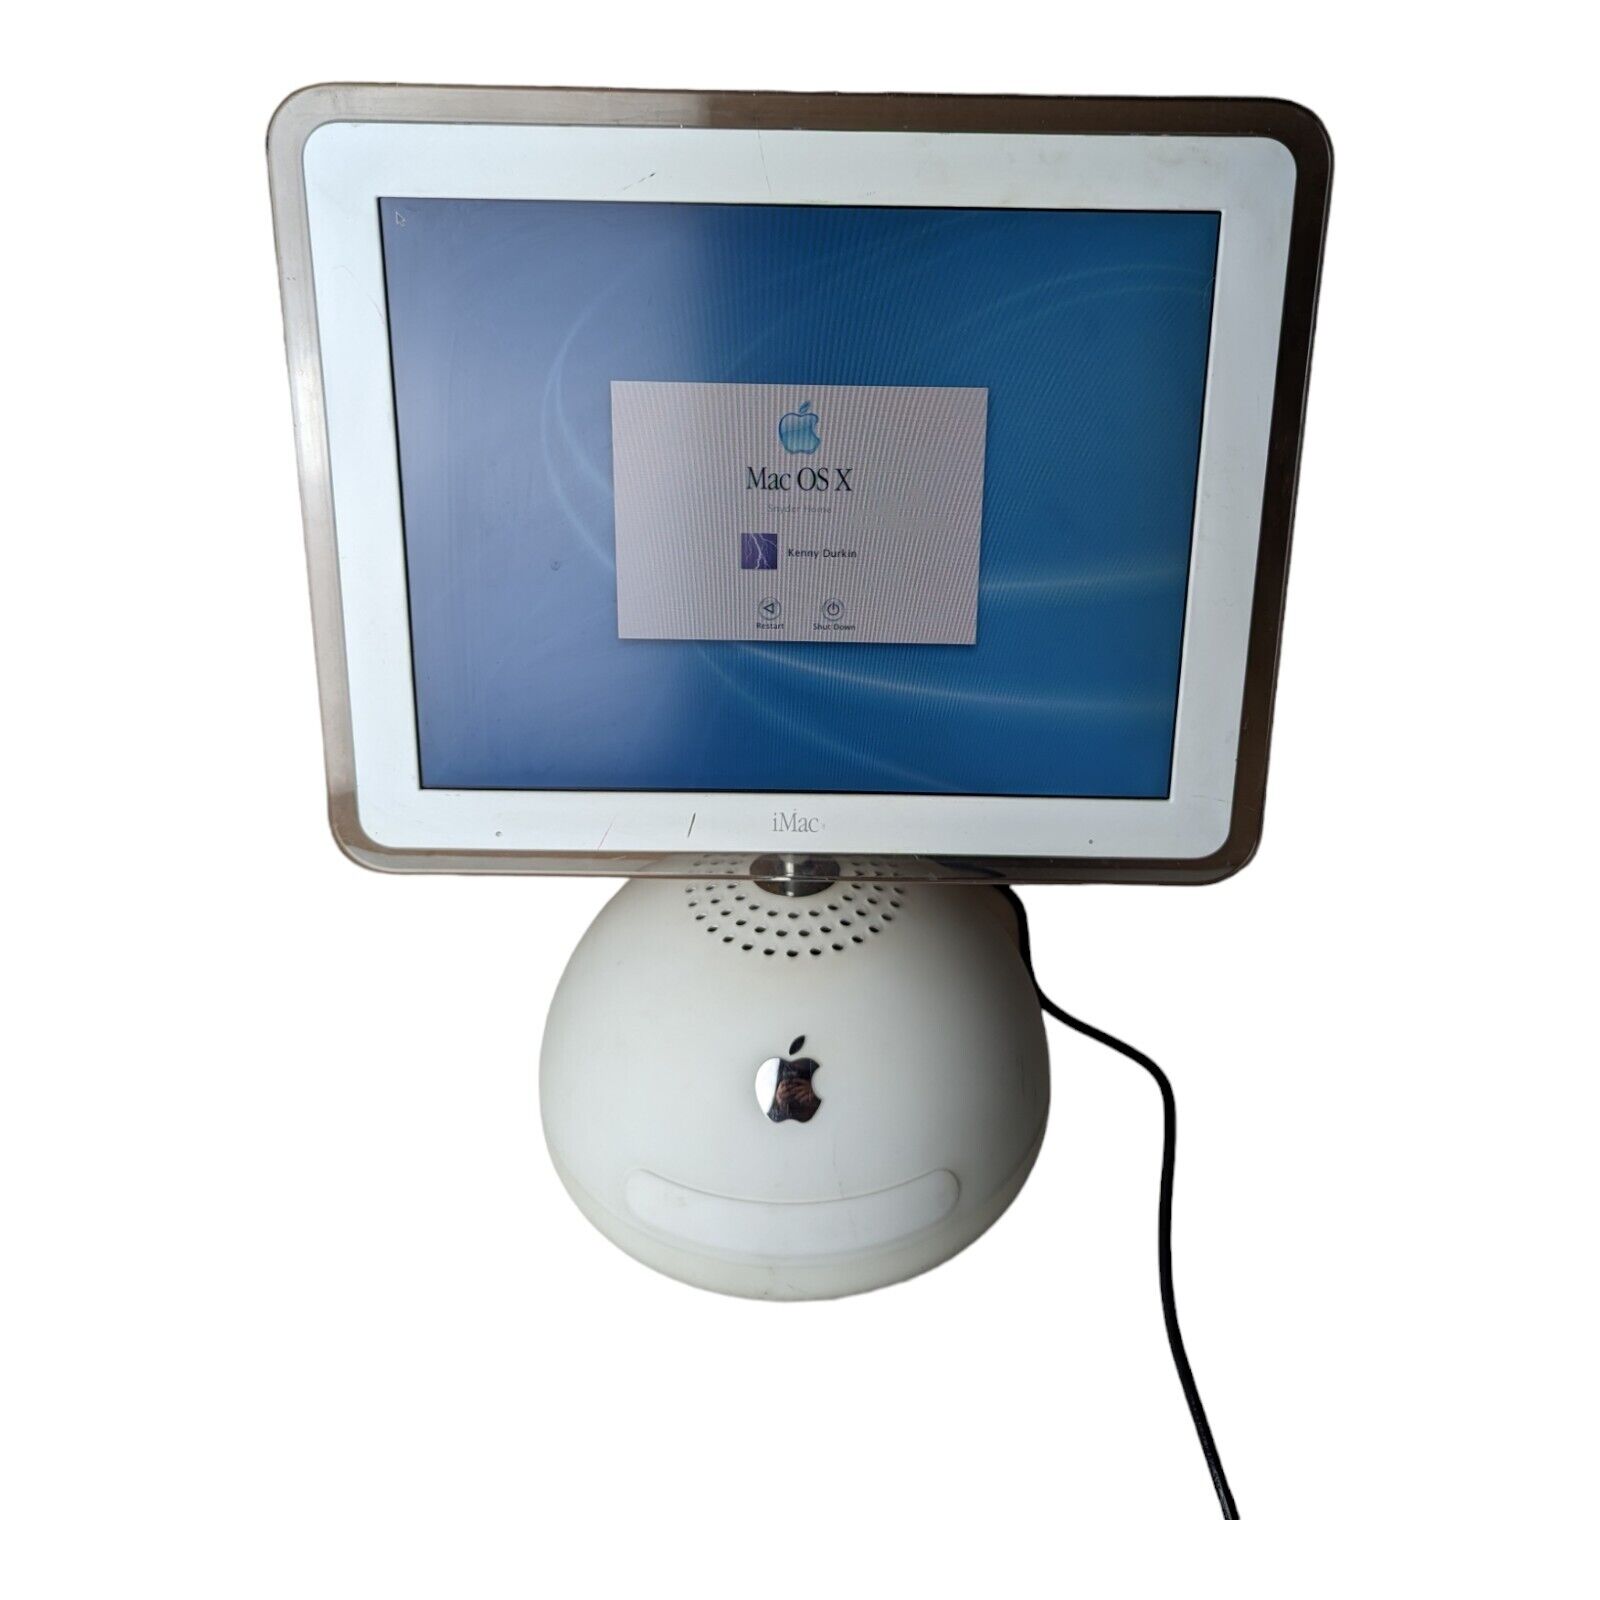 Vintage Apple iMac OS X M6498 15” Desktop Computer 128 MB|700MHz Mac Power PC G4